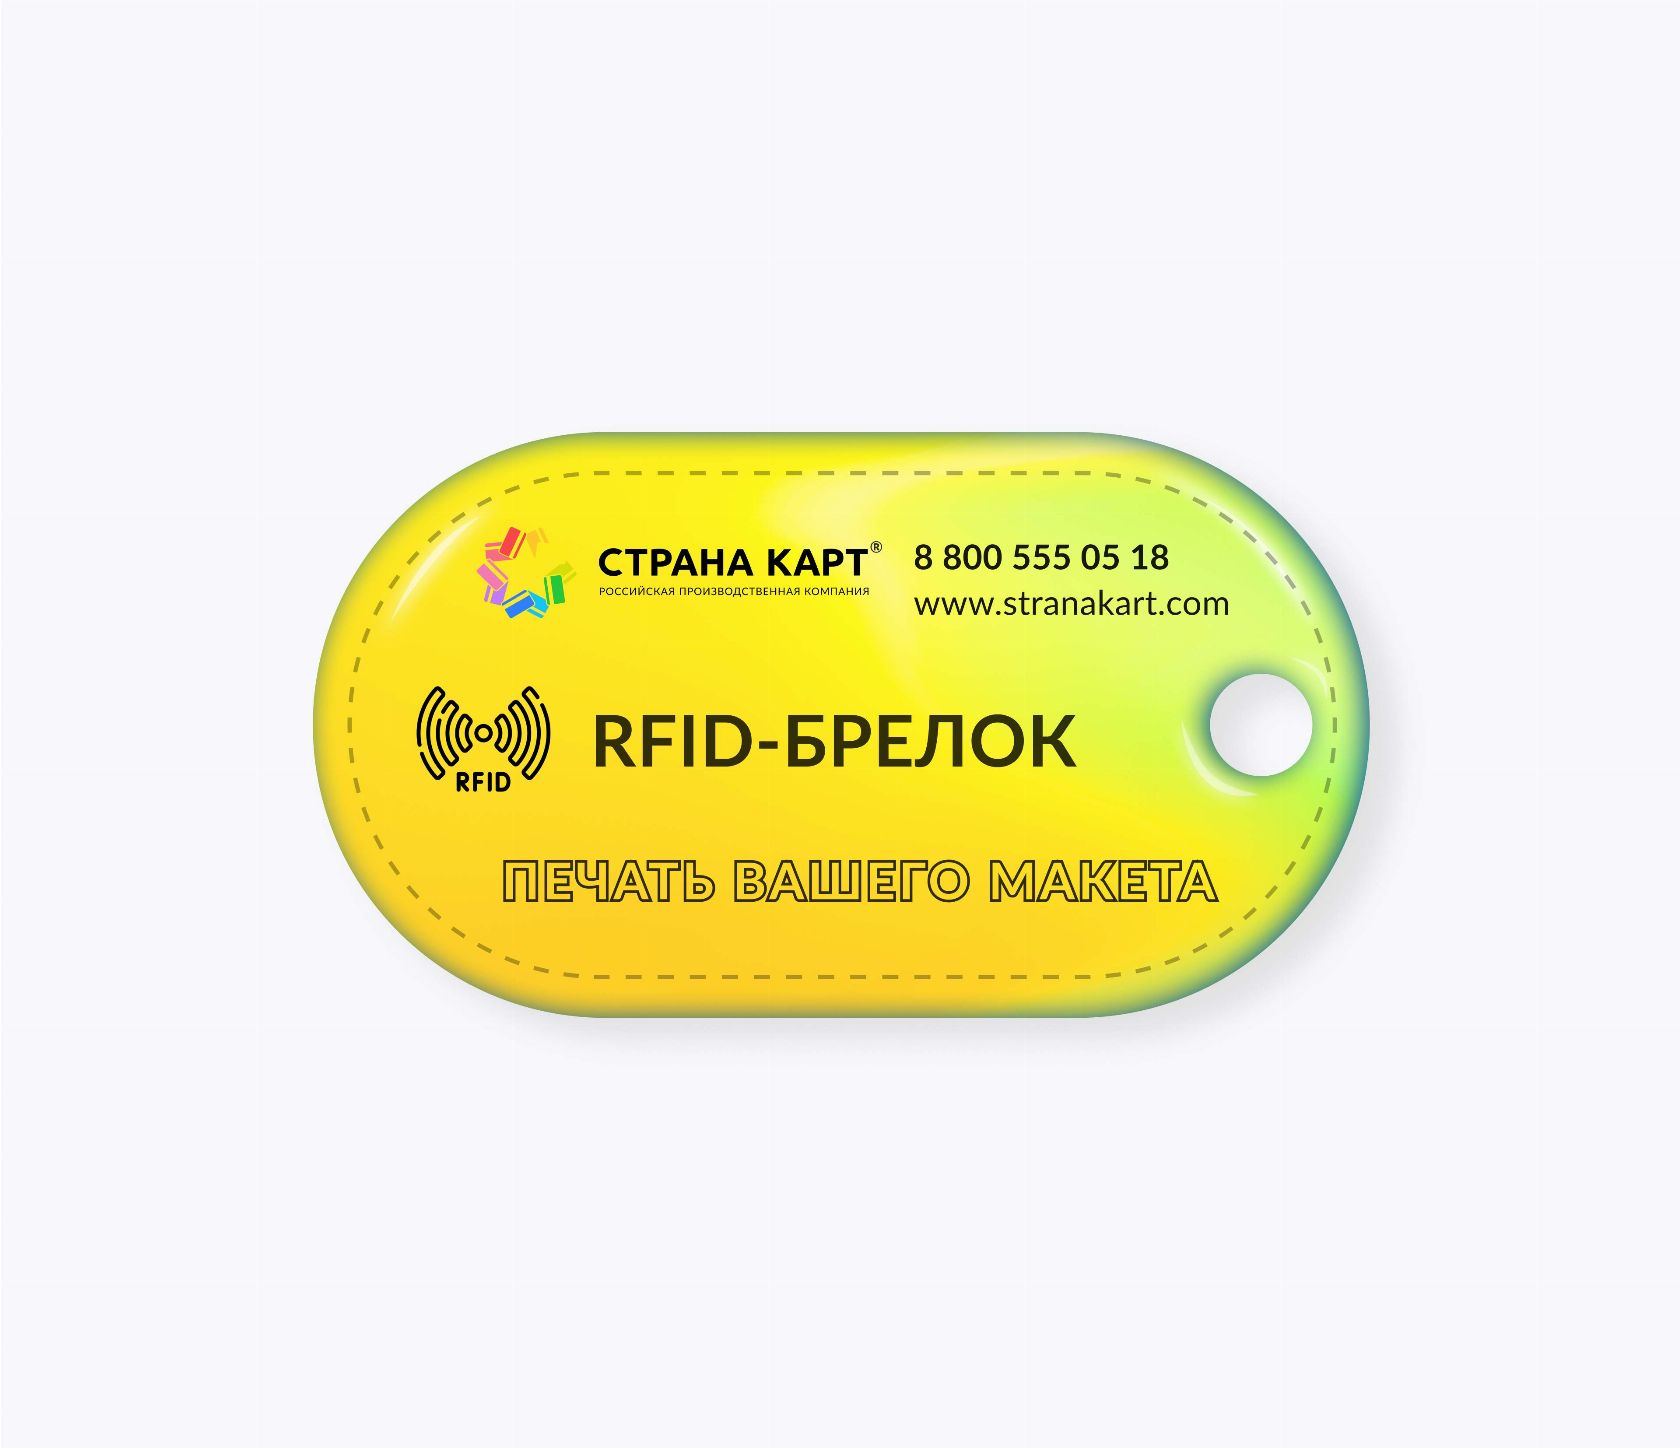 Овальные RFID-брелоки NEOKEY® с чипом NXP MIFARE Plus S 4k 7 byte UID RFID-брелоки NEOKEY® с чипом NXP MIFARE Plus S 4k 7 byte UID и вашим логотипом